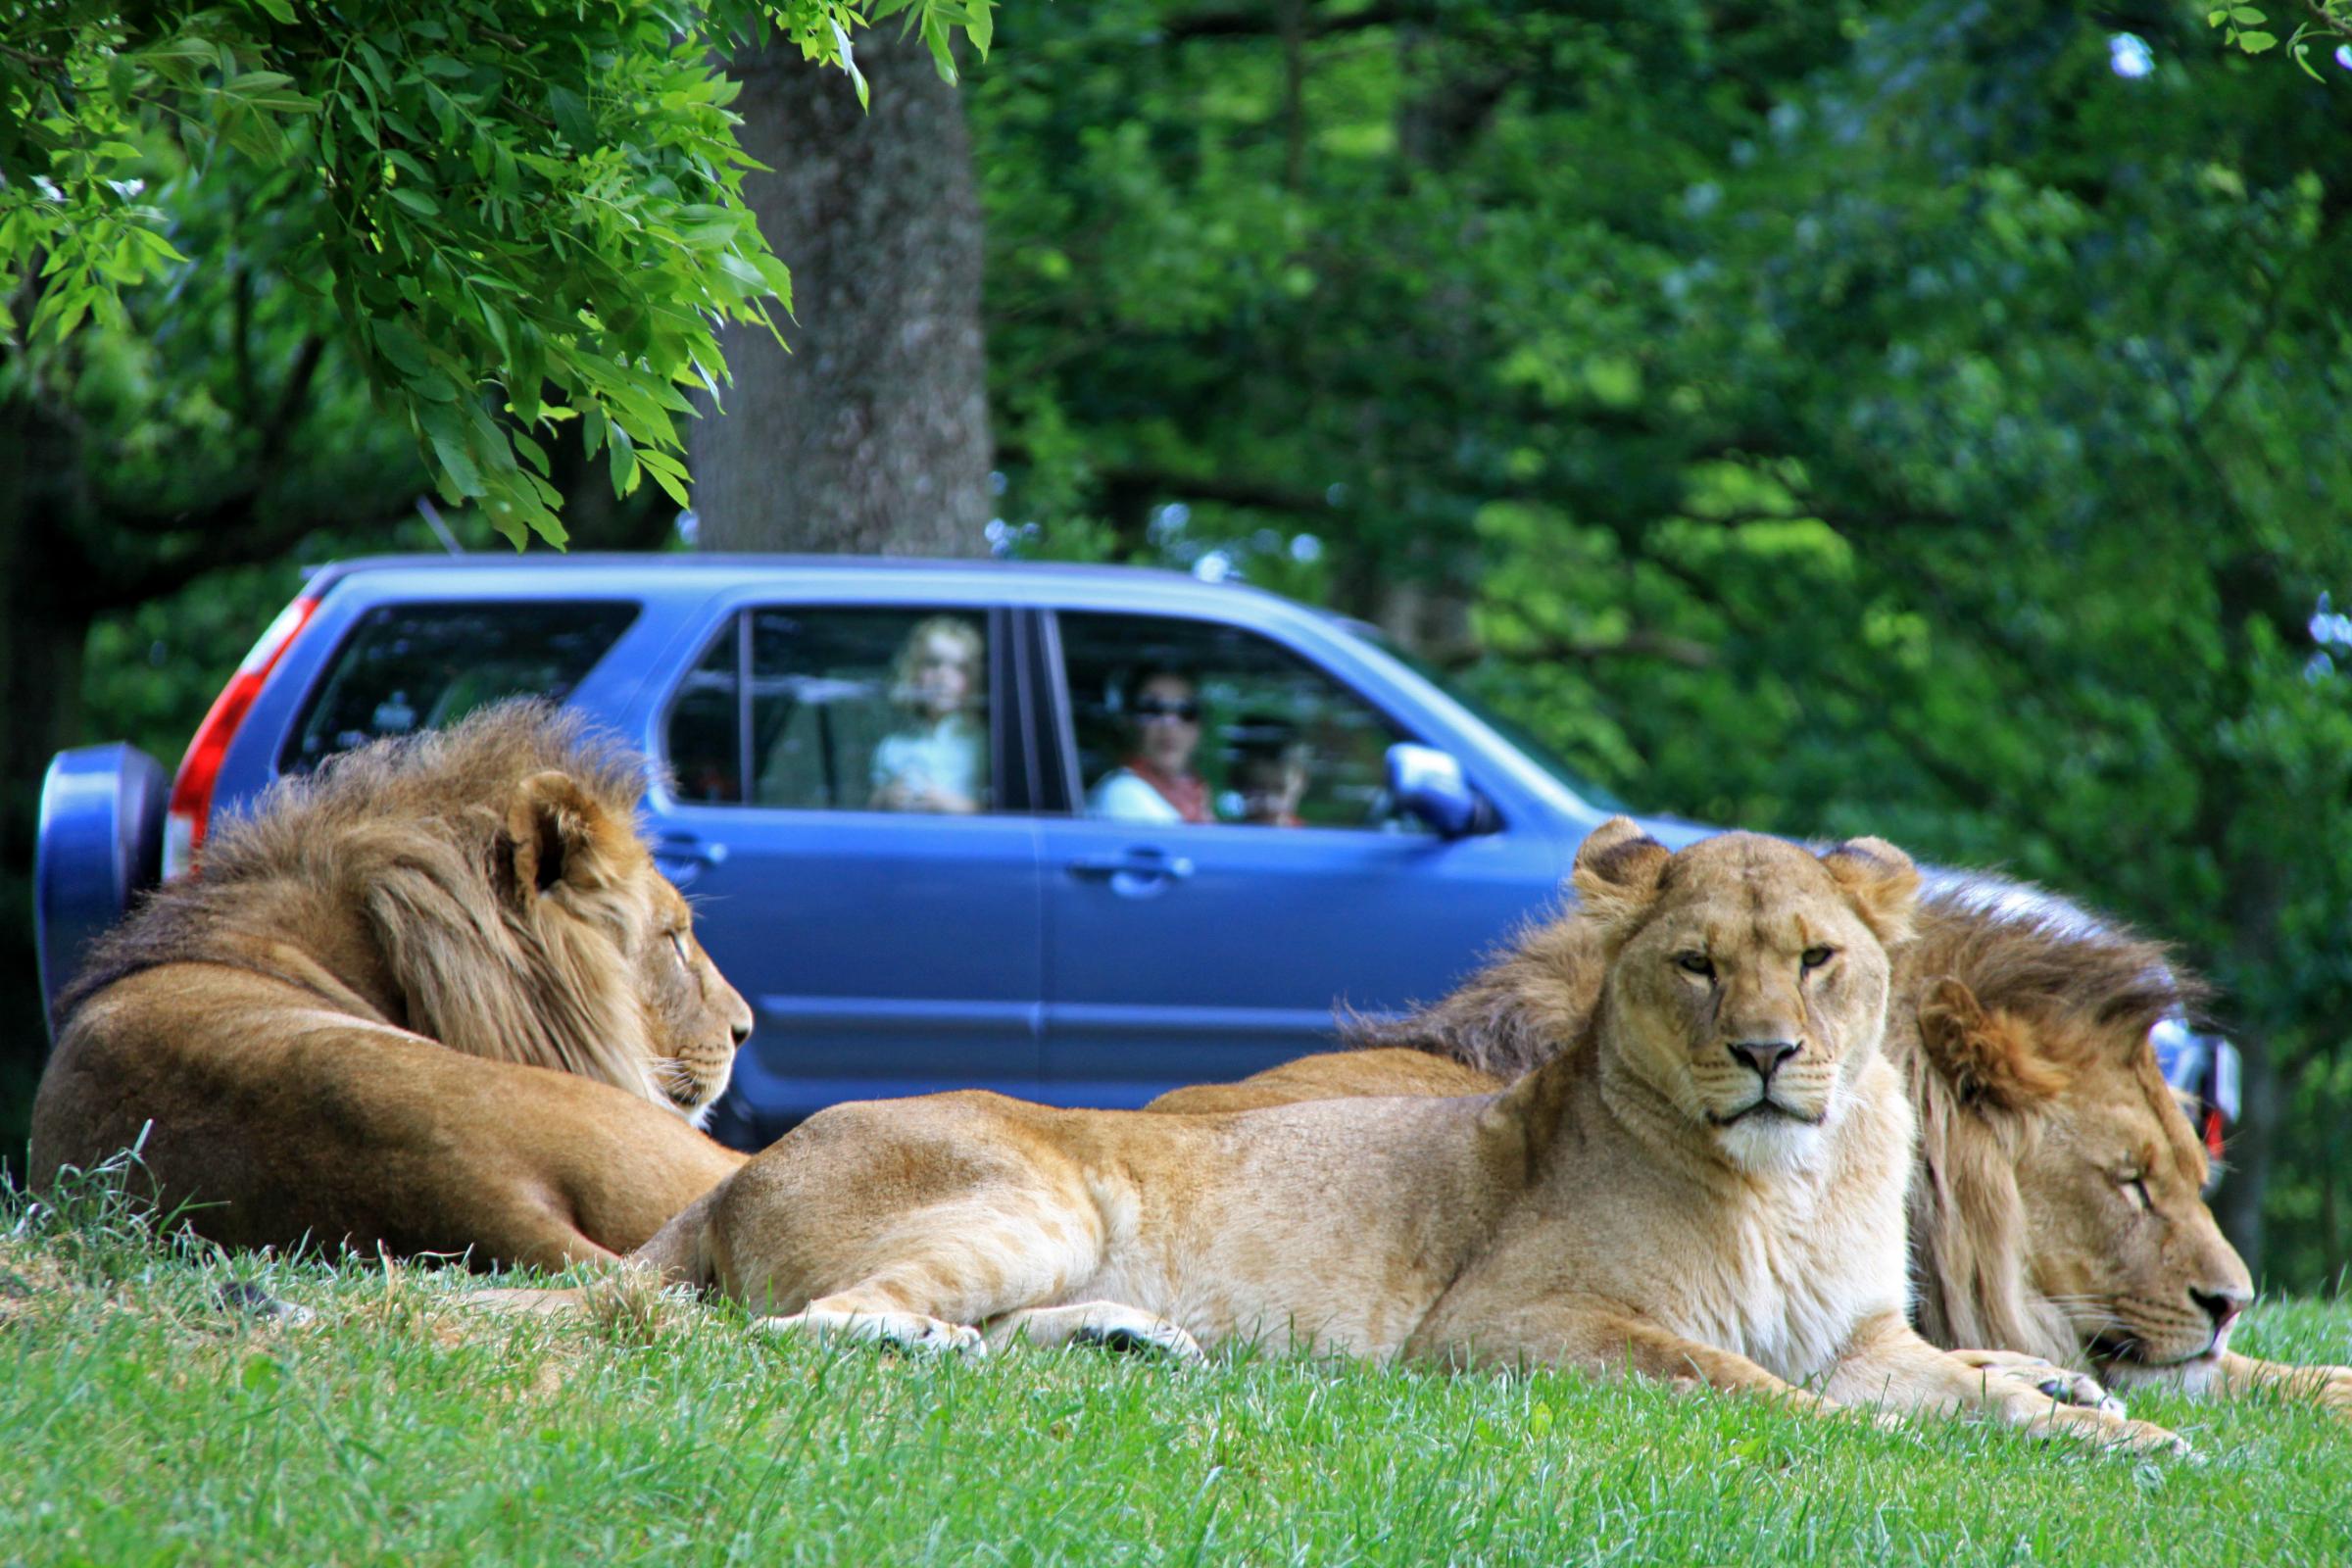 Lion country at Longleat Safari Park